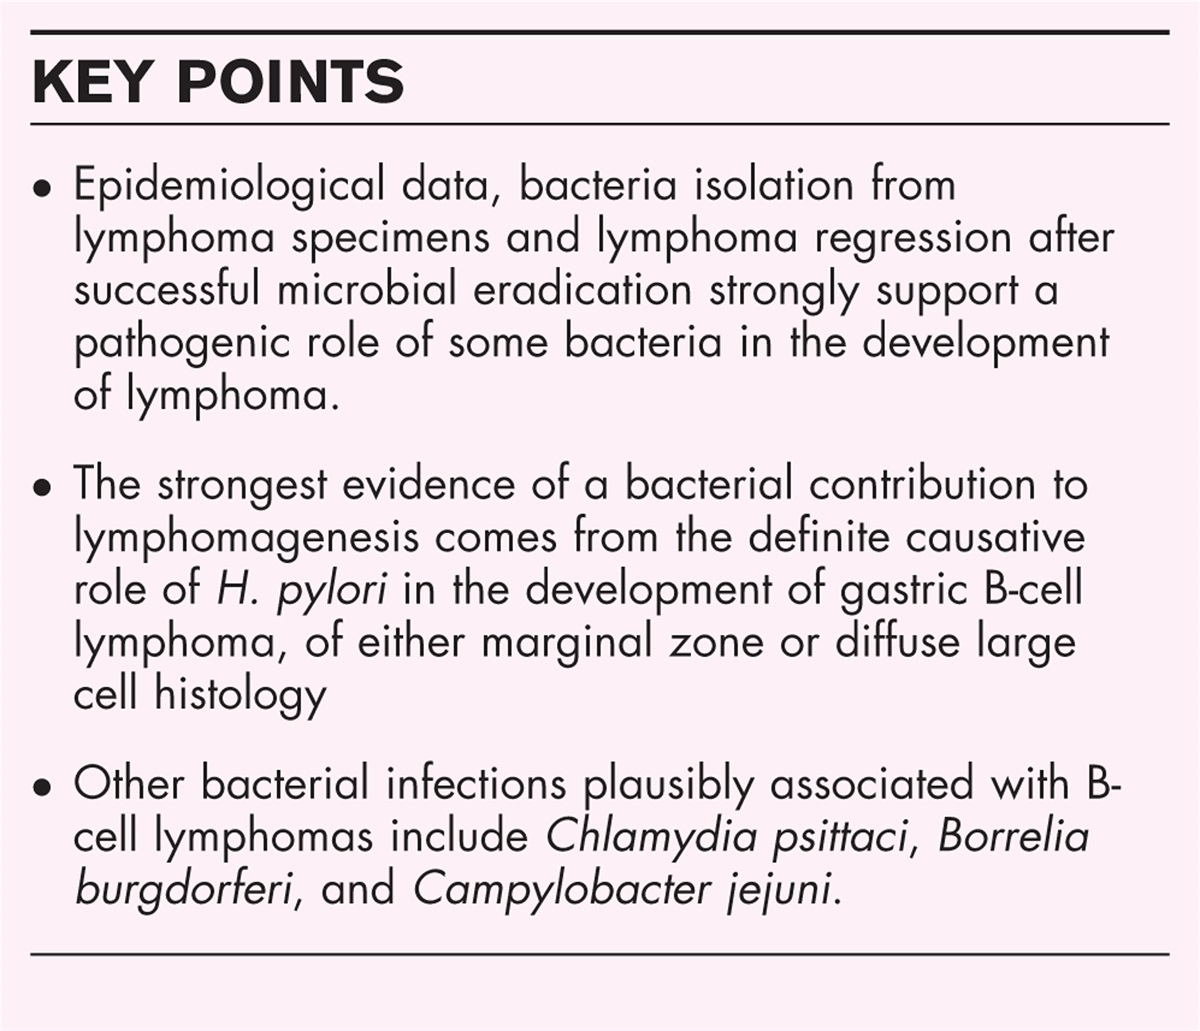 Bacterial infection-driven lymphomagenesis